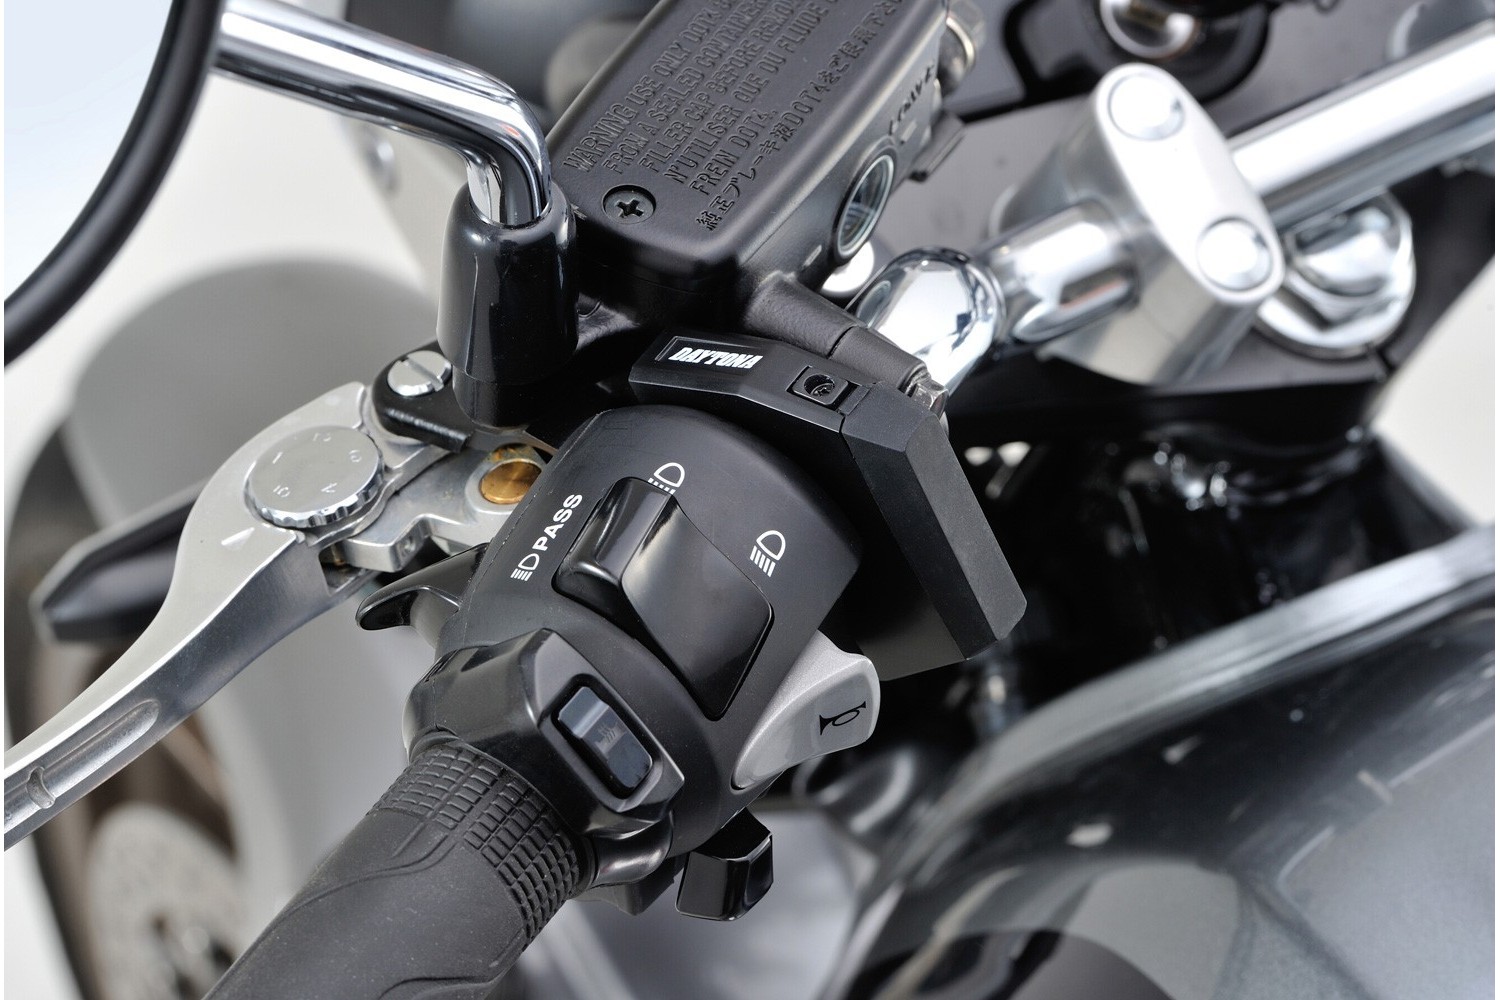 Power supply USB SLIM 2x USB for motorcycle handlebar - Daytona Europe